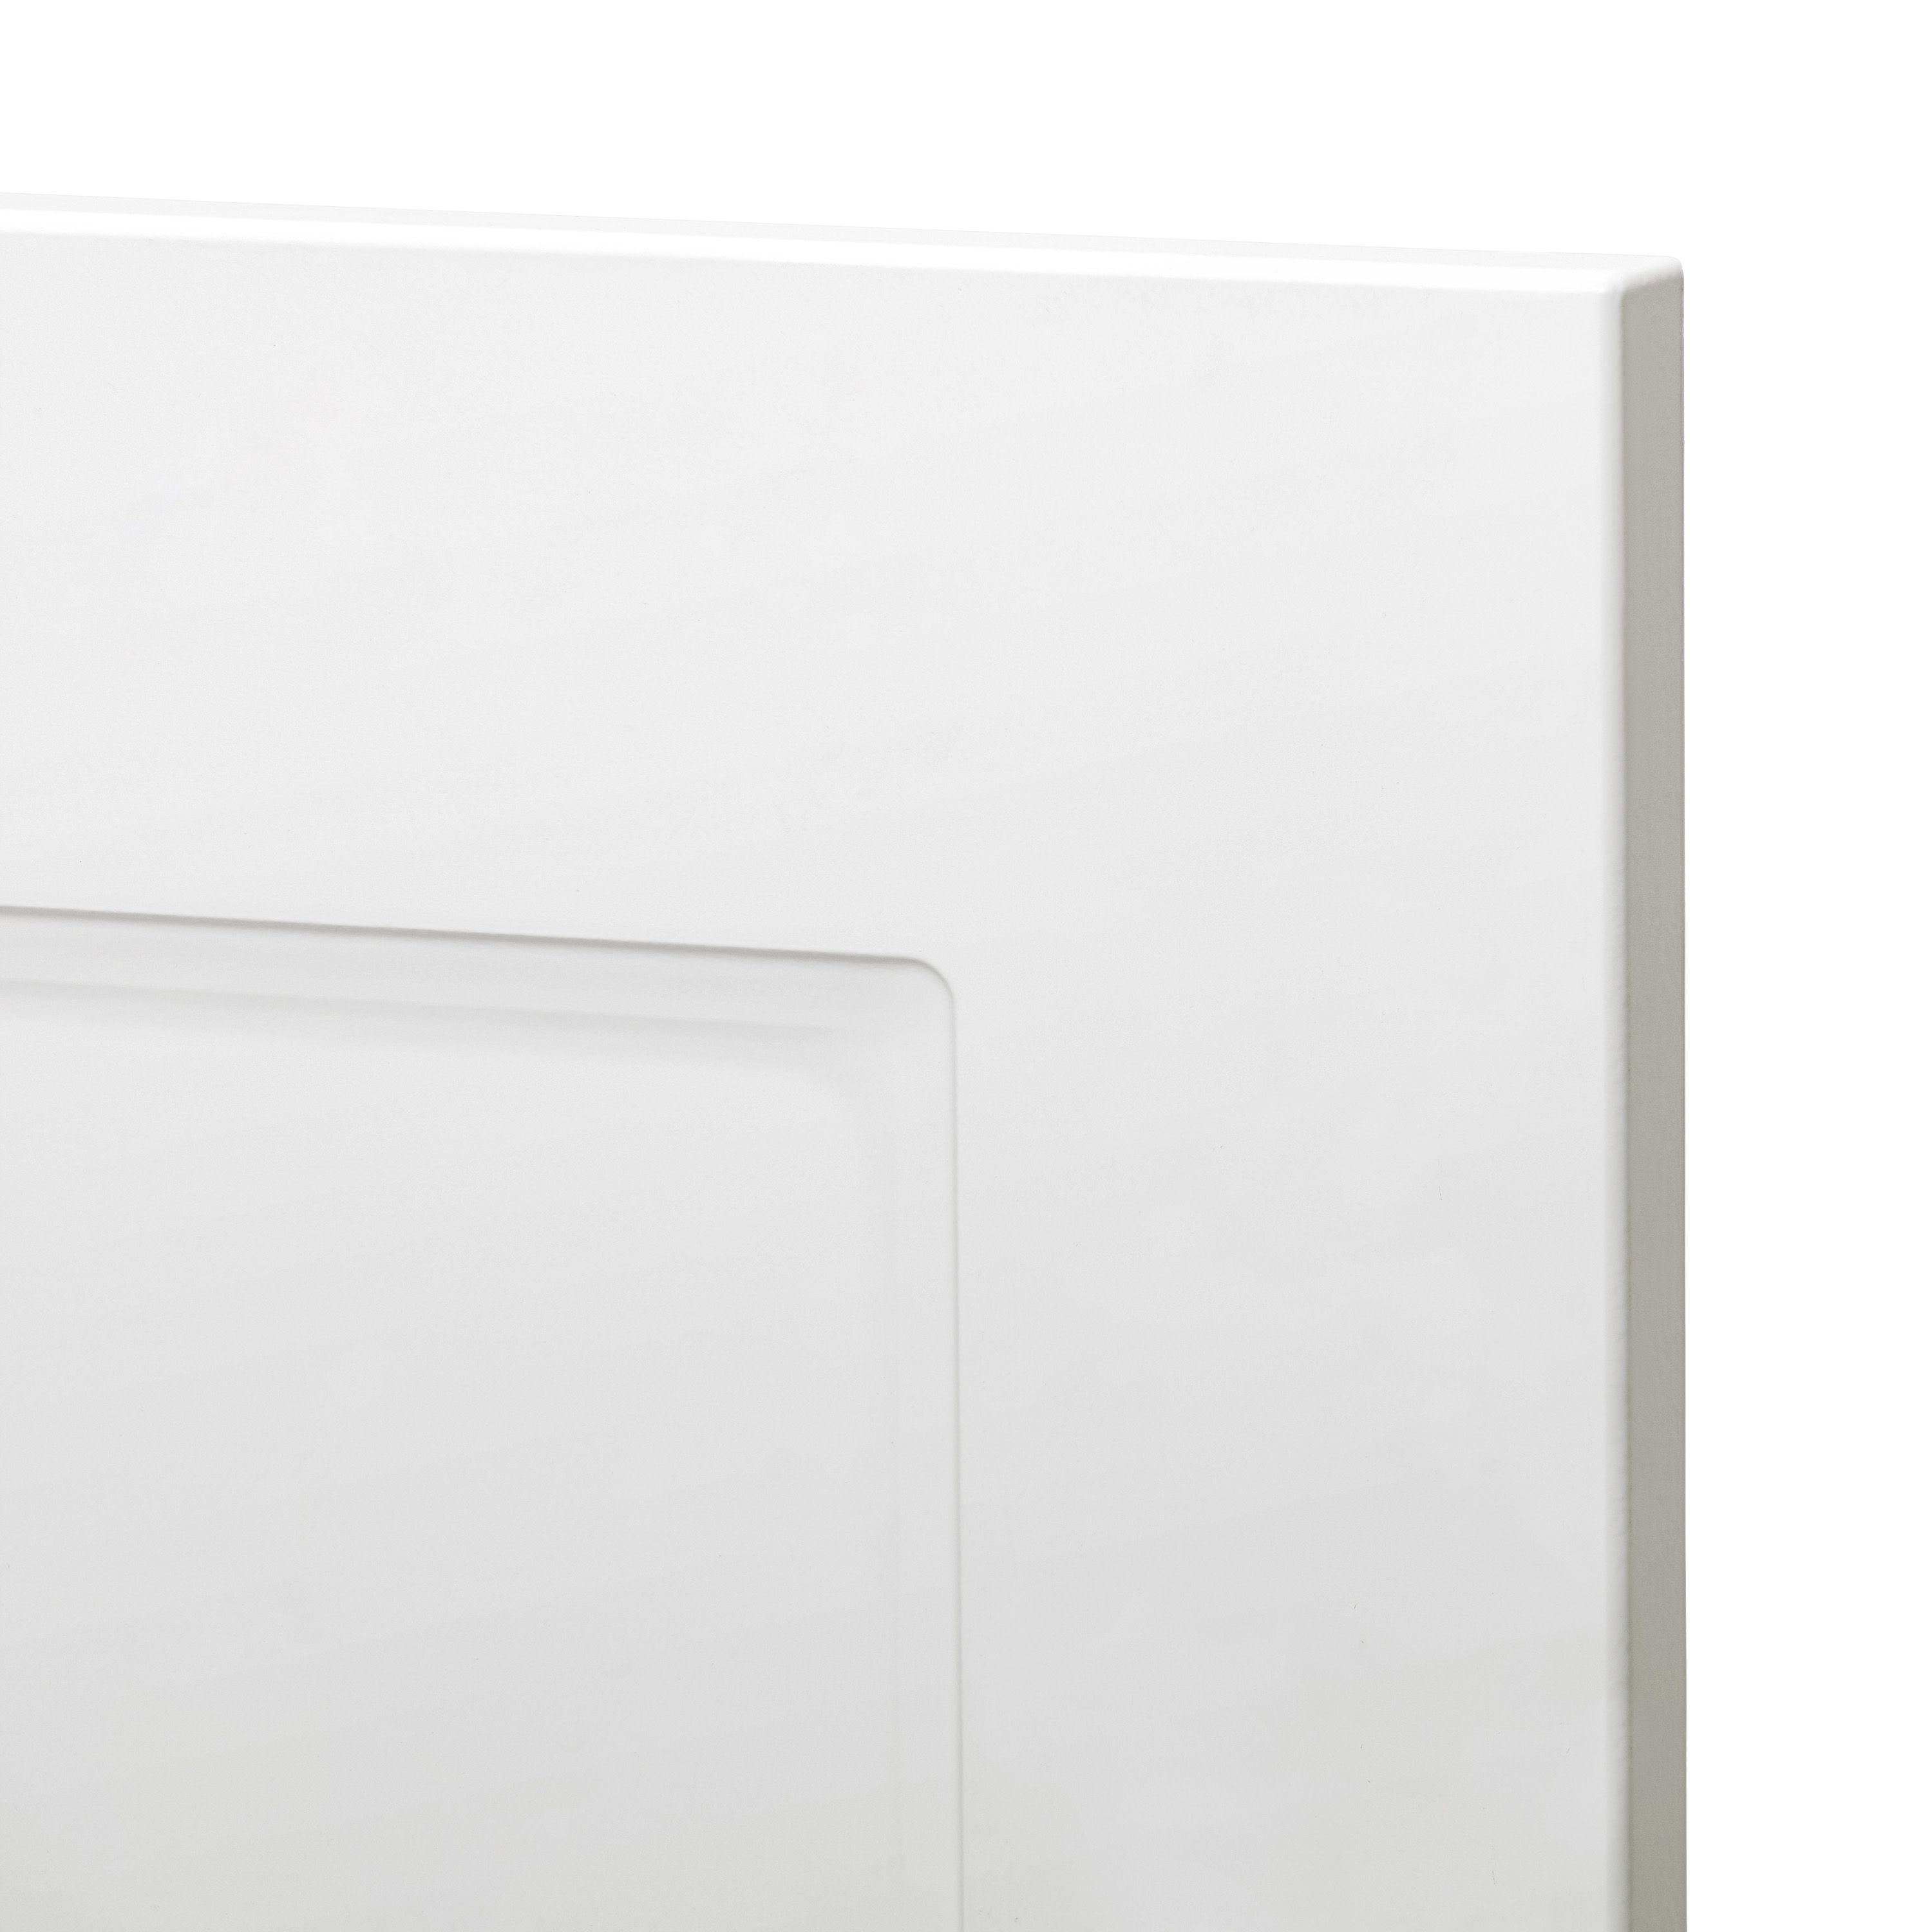 GoodHome Artemisia Matt white classic shaker Tall larder Cabinet door (W)500mm (H)1467mm (T)18mm